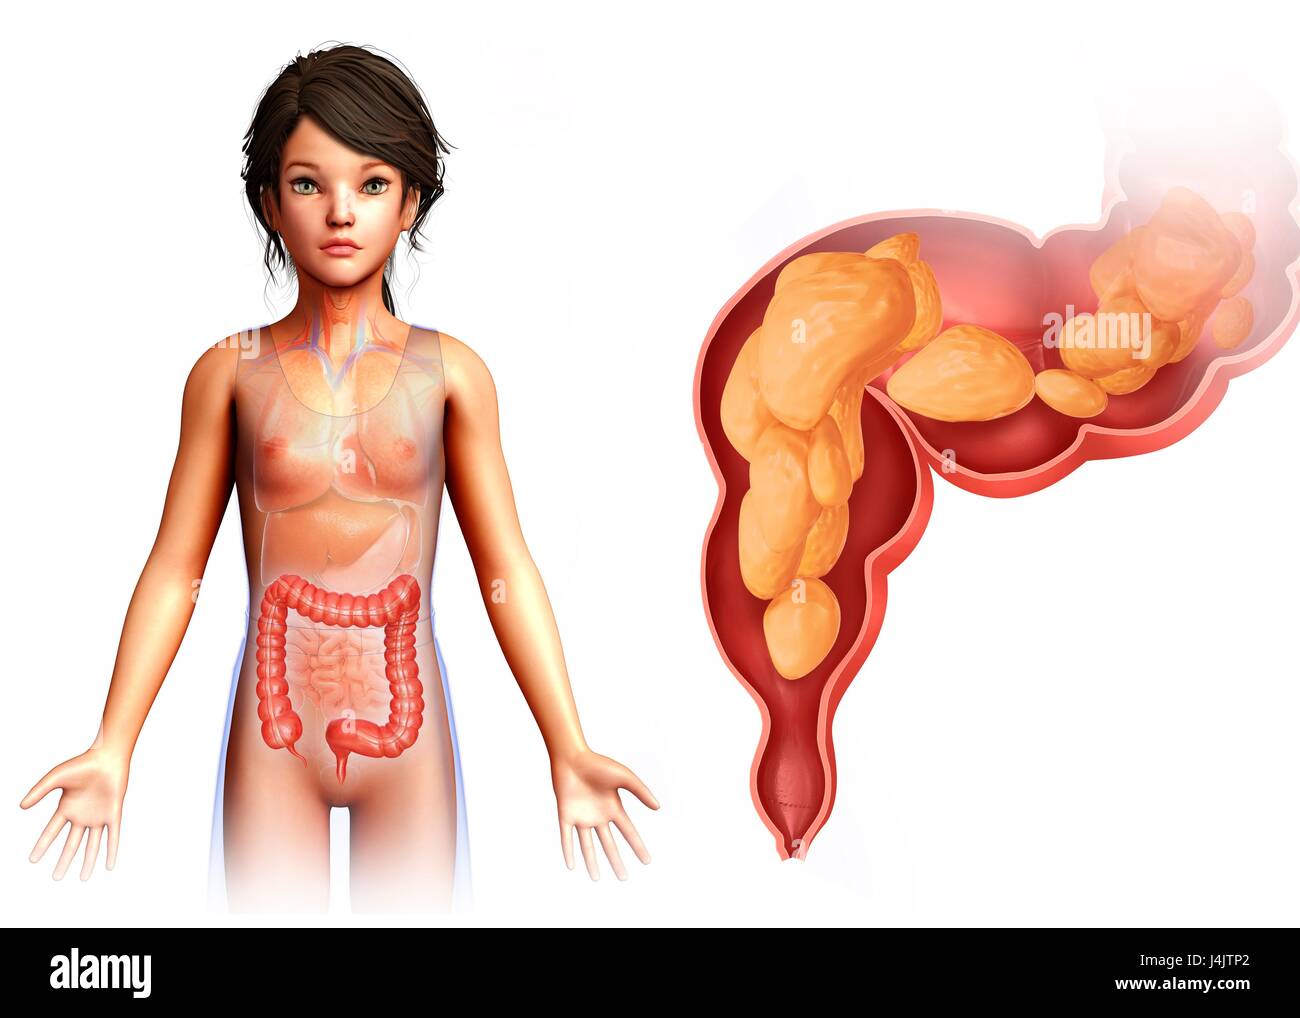 Illustration of a child's rectum. Stock Photo